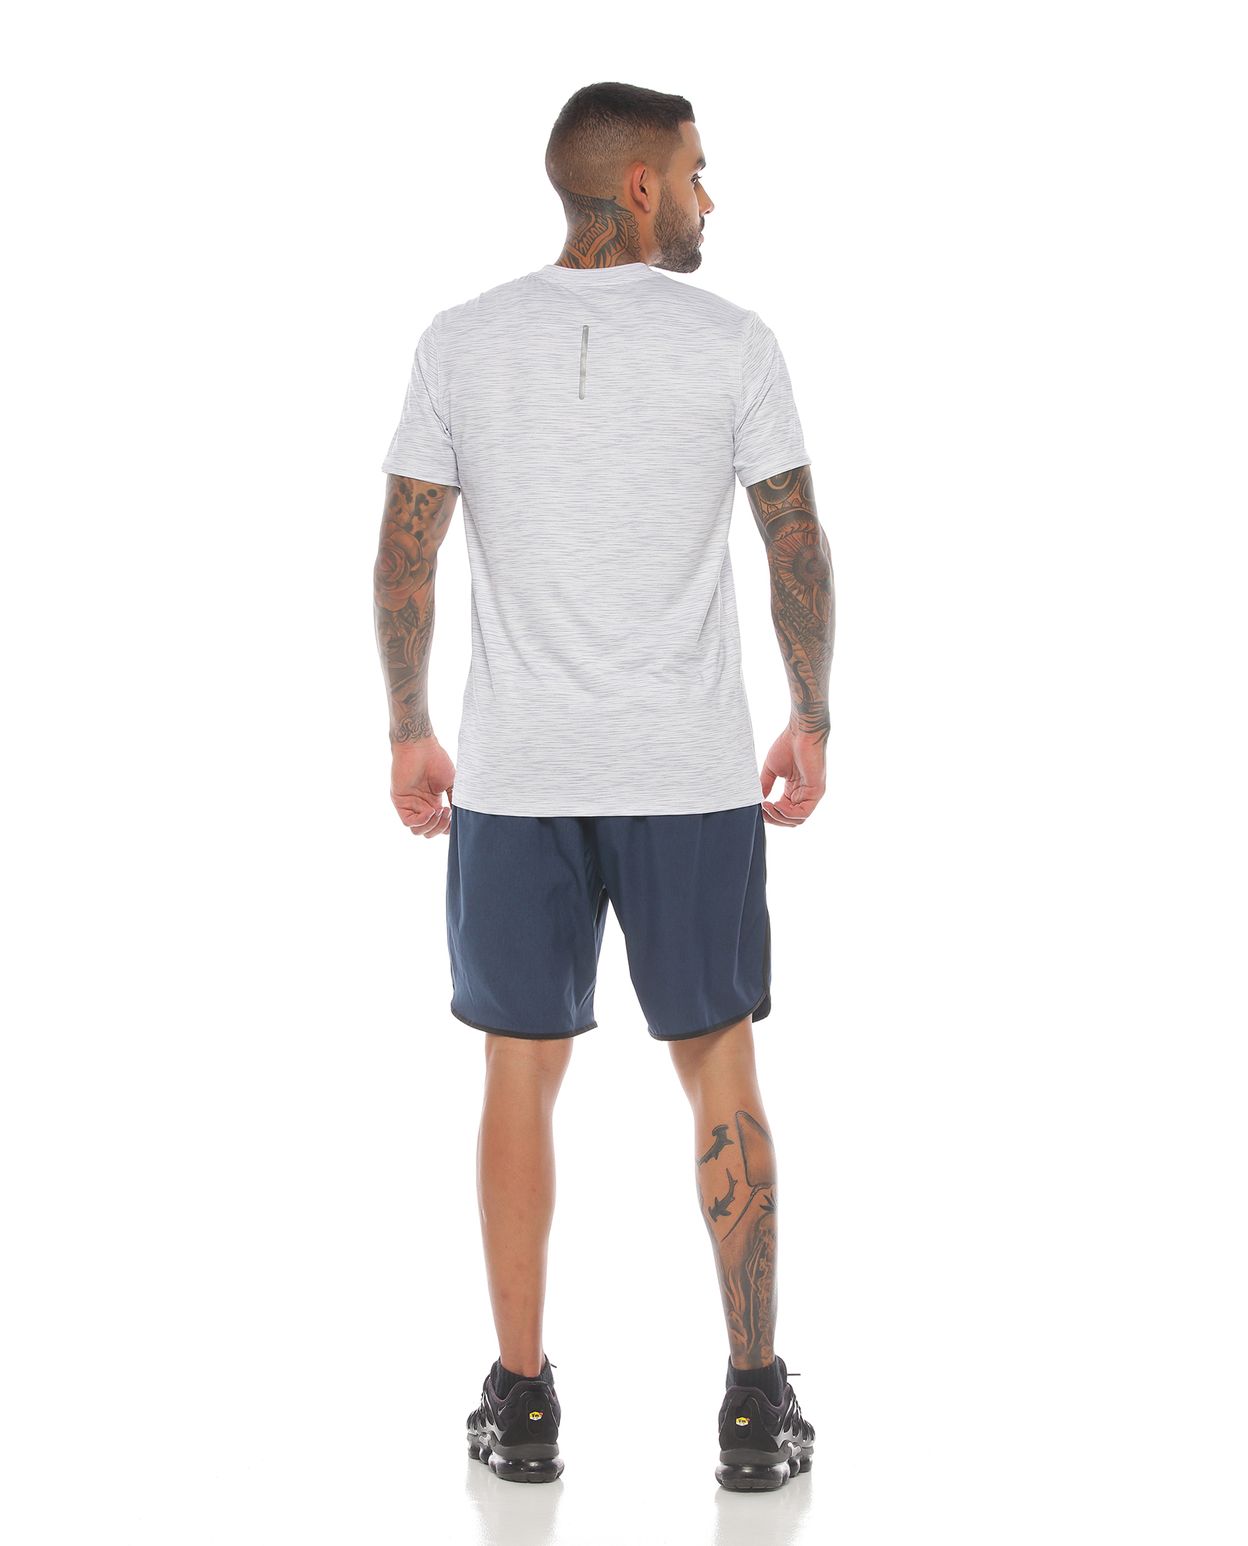 modelo con pantaloneta deportiva color petroleo negro y camiseta manga corta deportiva color blanca para hombre cuerpo completo parte trasera